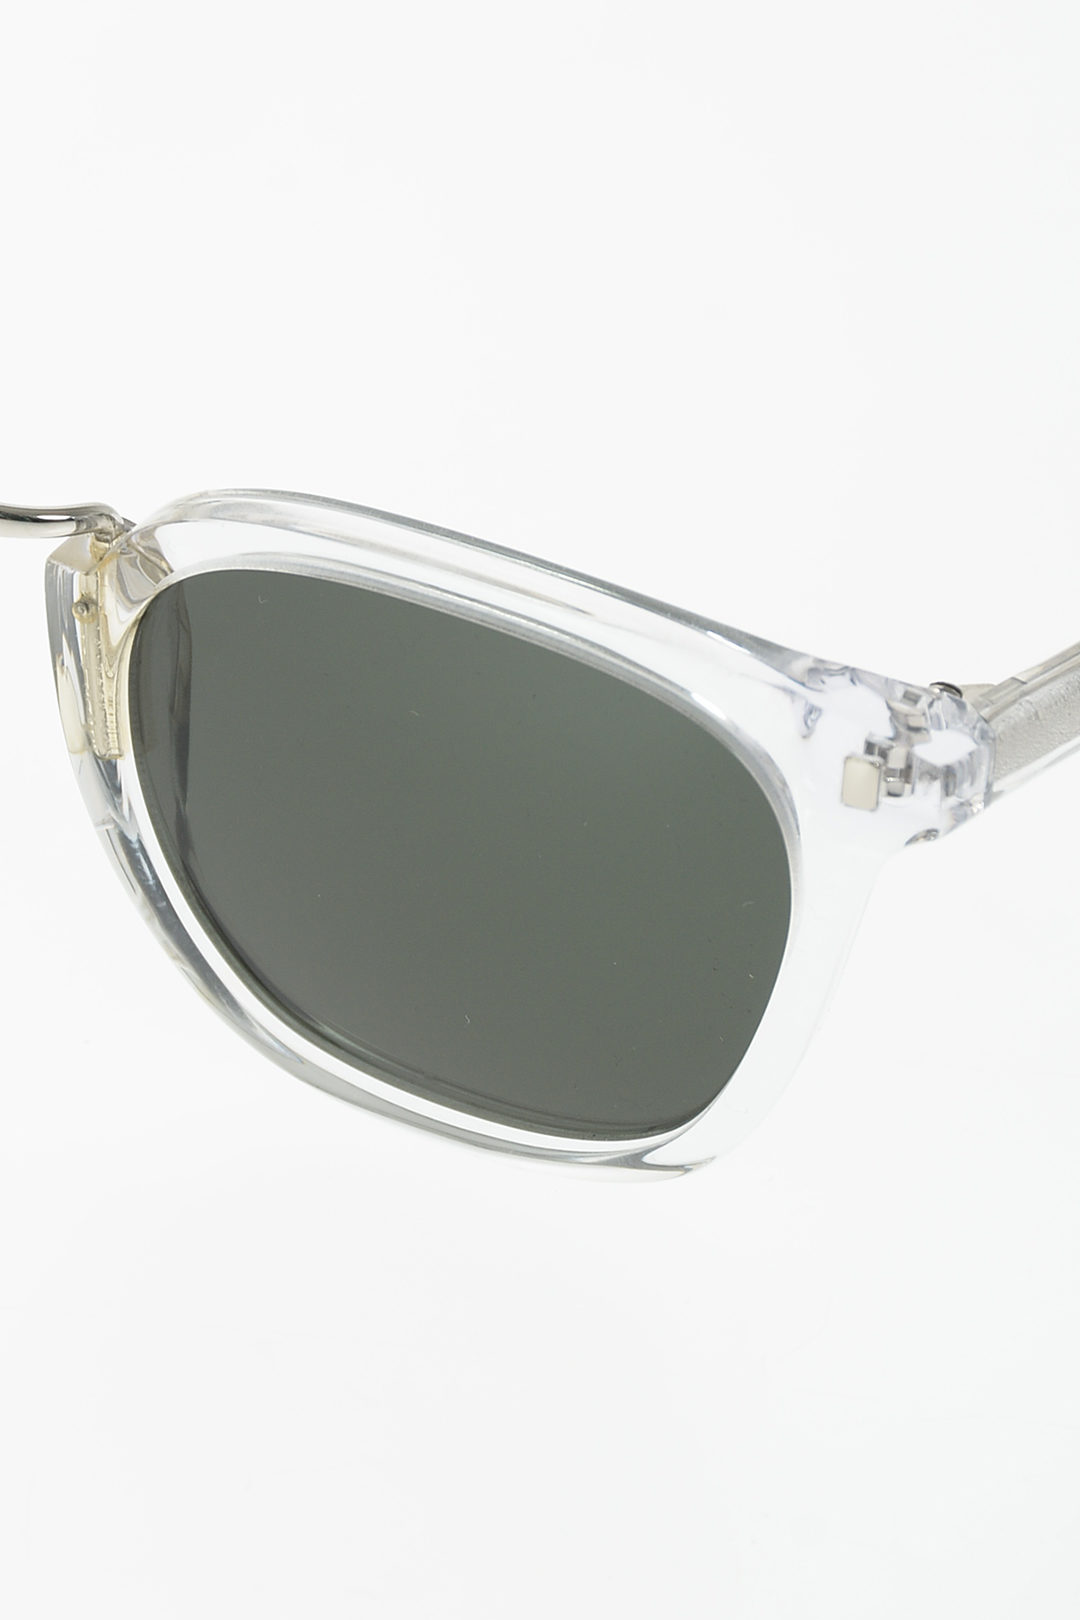 Hustler Clear Black Polarized Round Sunglasses